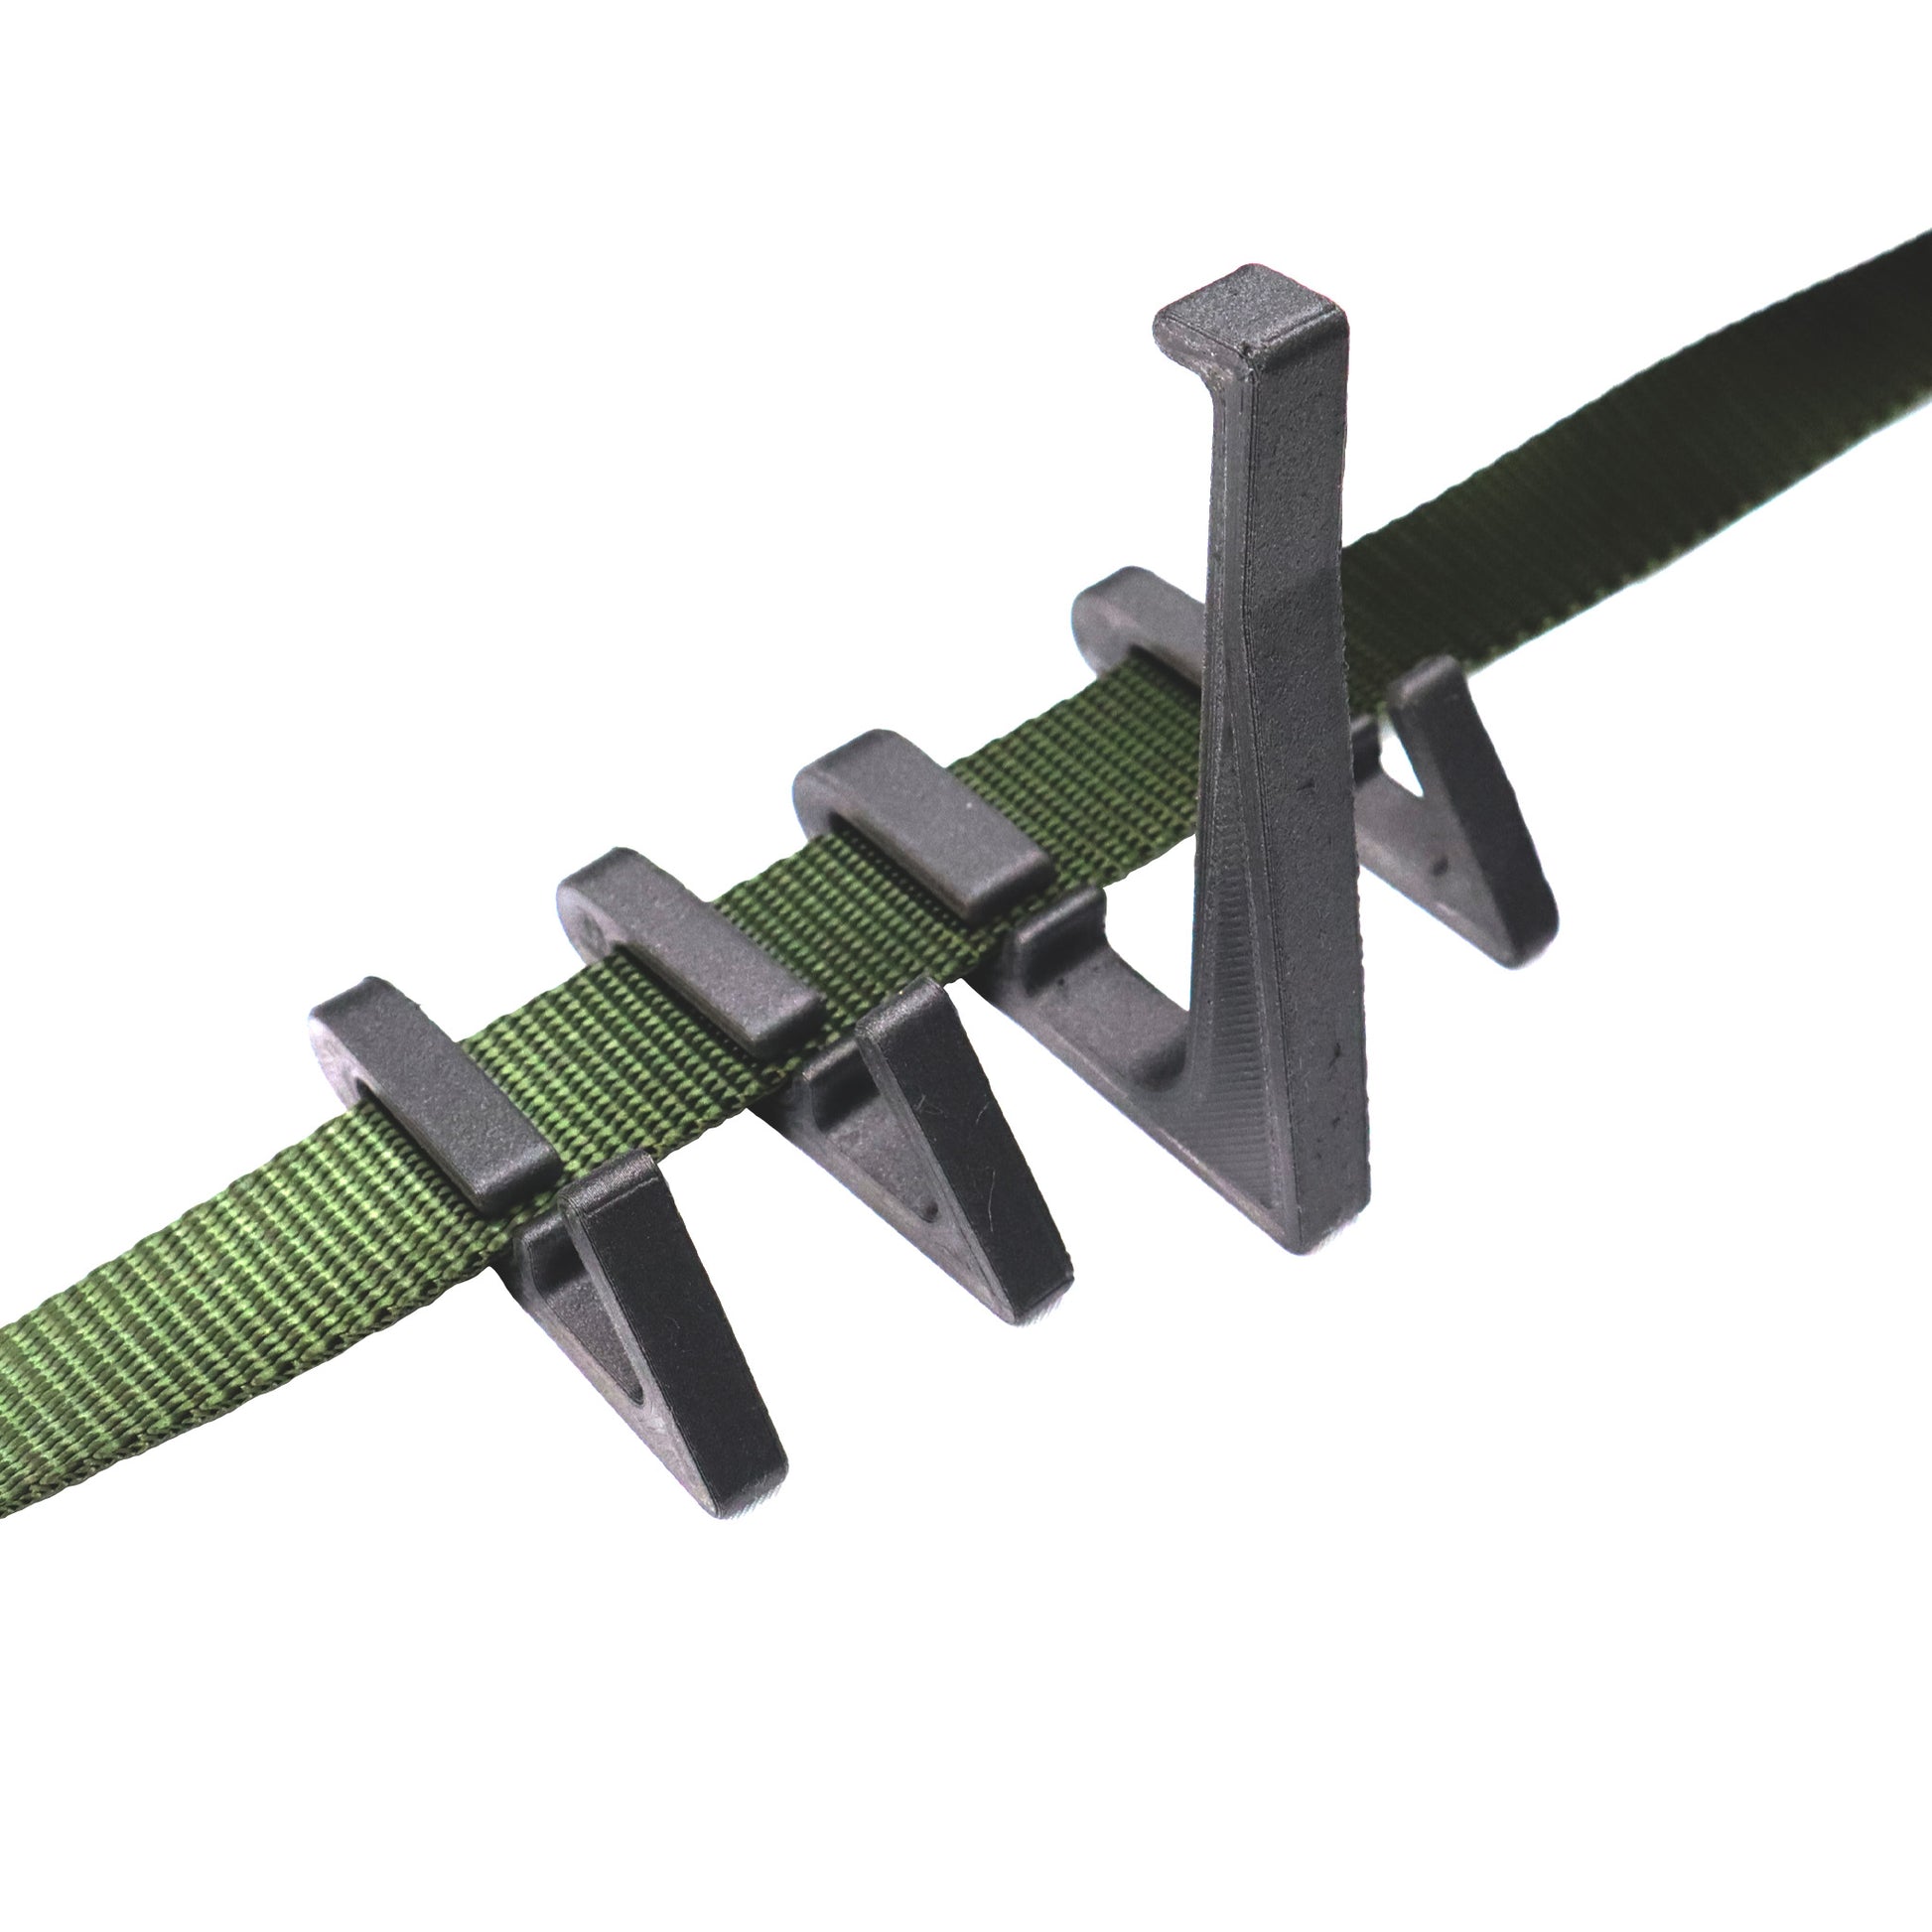 3D Printed Bow/Gear Hanger Hooks on strap